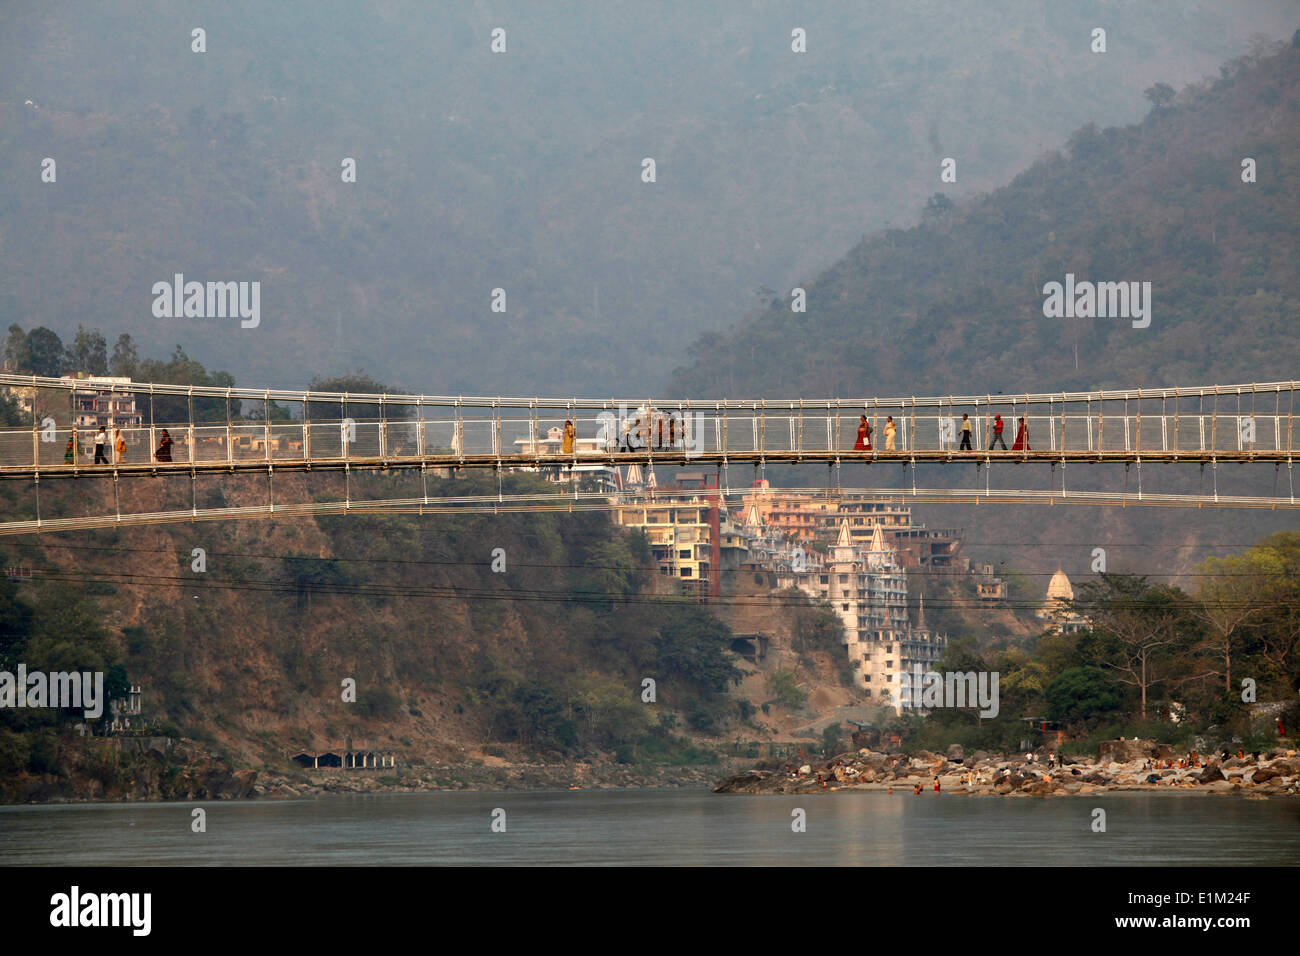 Ram Jula - bridge on the Ganga river Stock Photo - Alamy